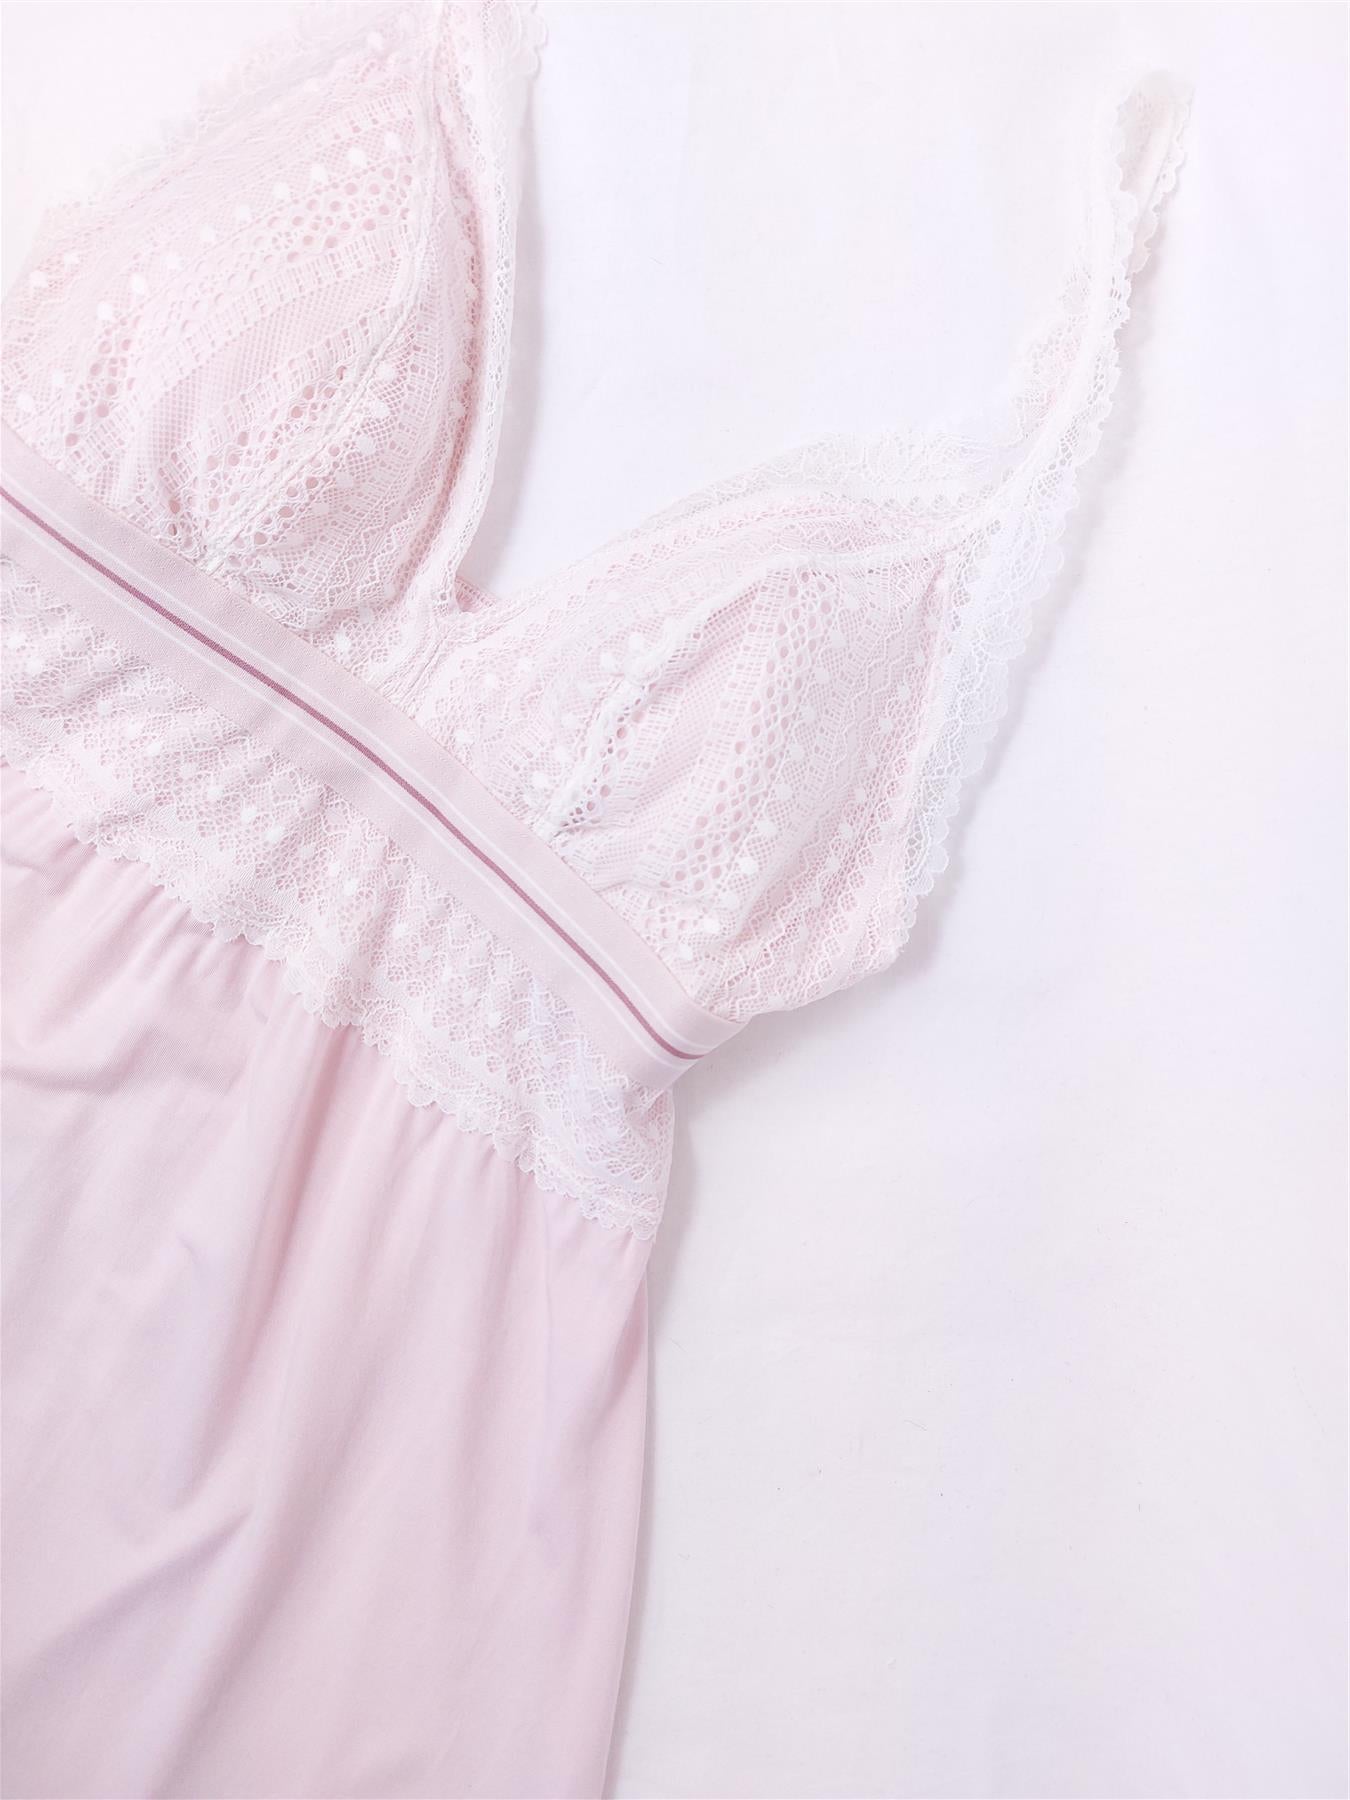 Women's Supersoft Nightdress Slip Pyjama Sleepwear Lace Trim Nightie Pale Pink